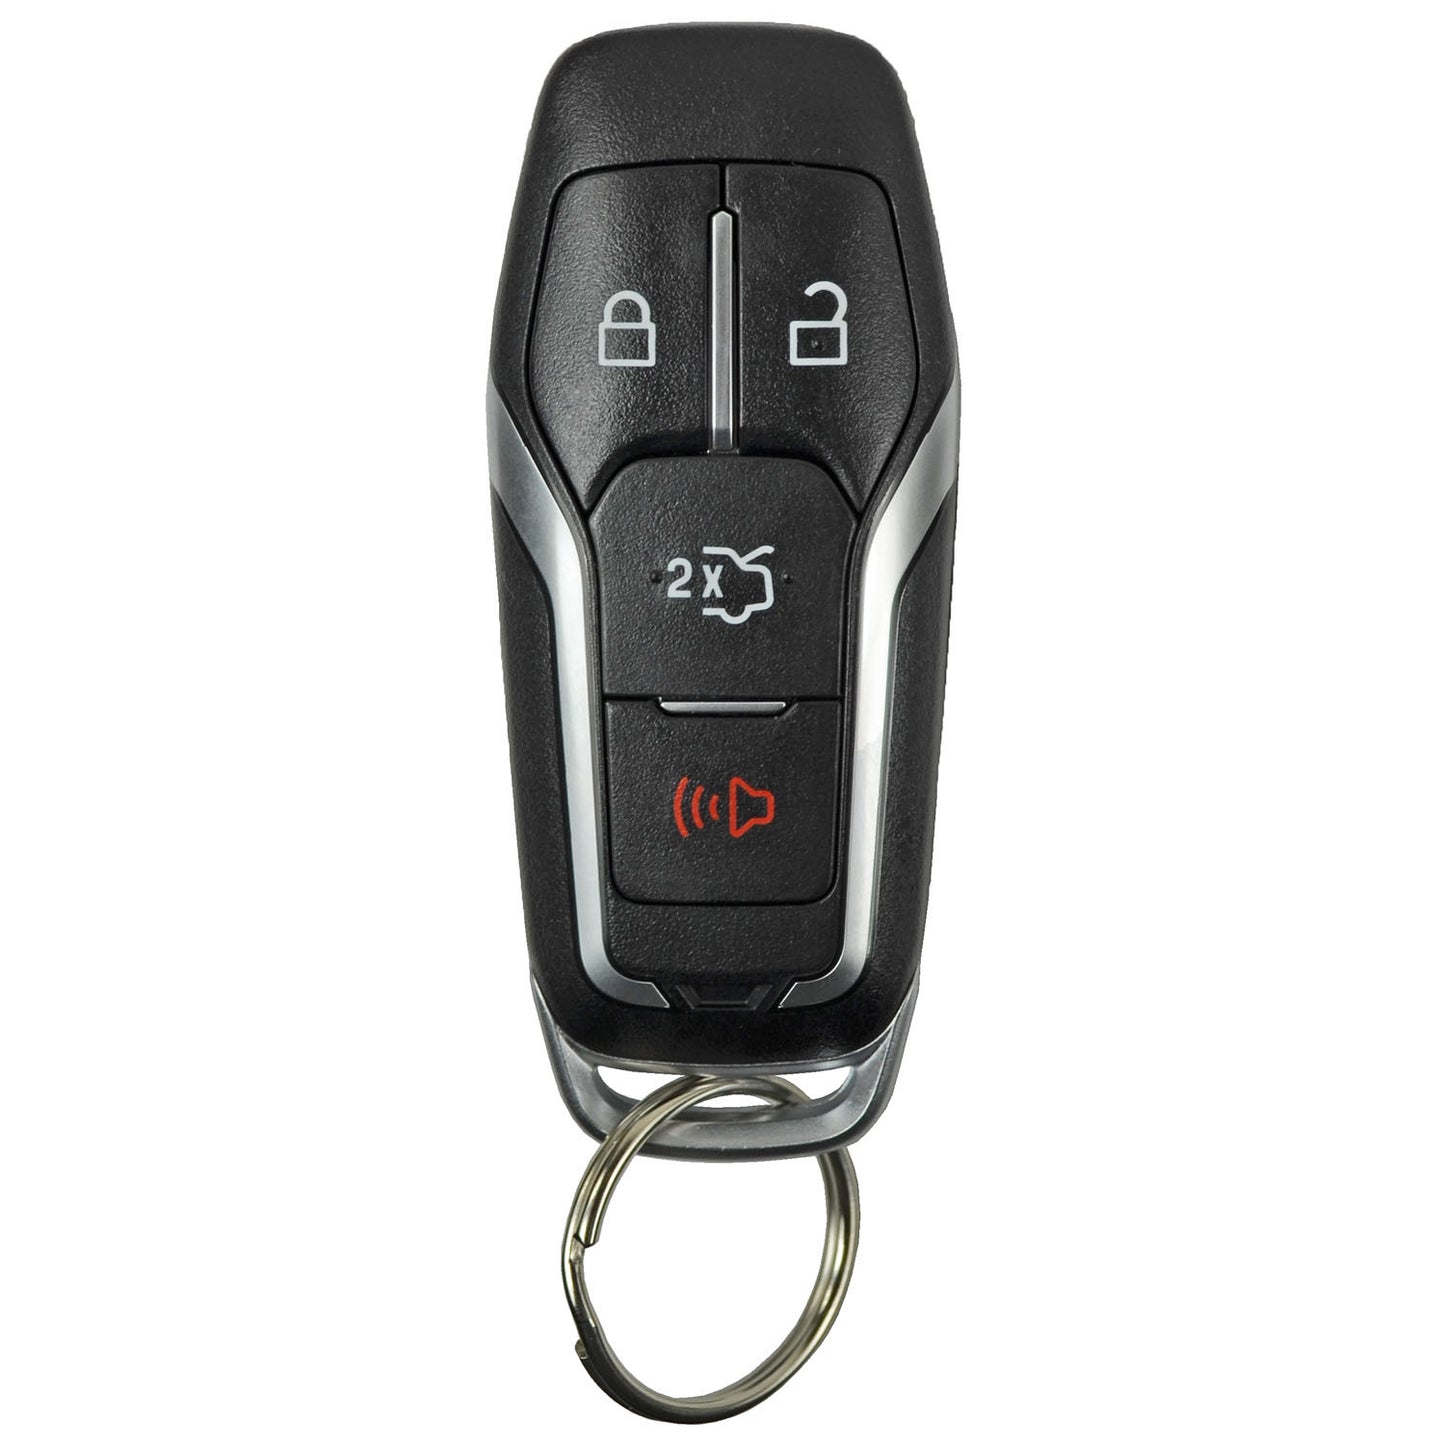 Ford 2016 Explorer 4 Btn Proximity Remote w/ Insert Key (Original) - FCC ID: M3N-A2C31243800 - ZIPPY LOCKSHOP